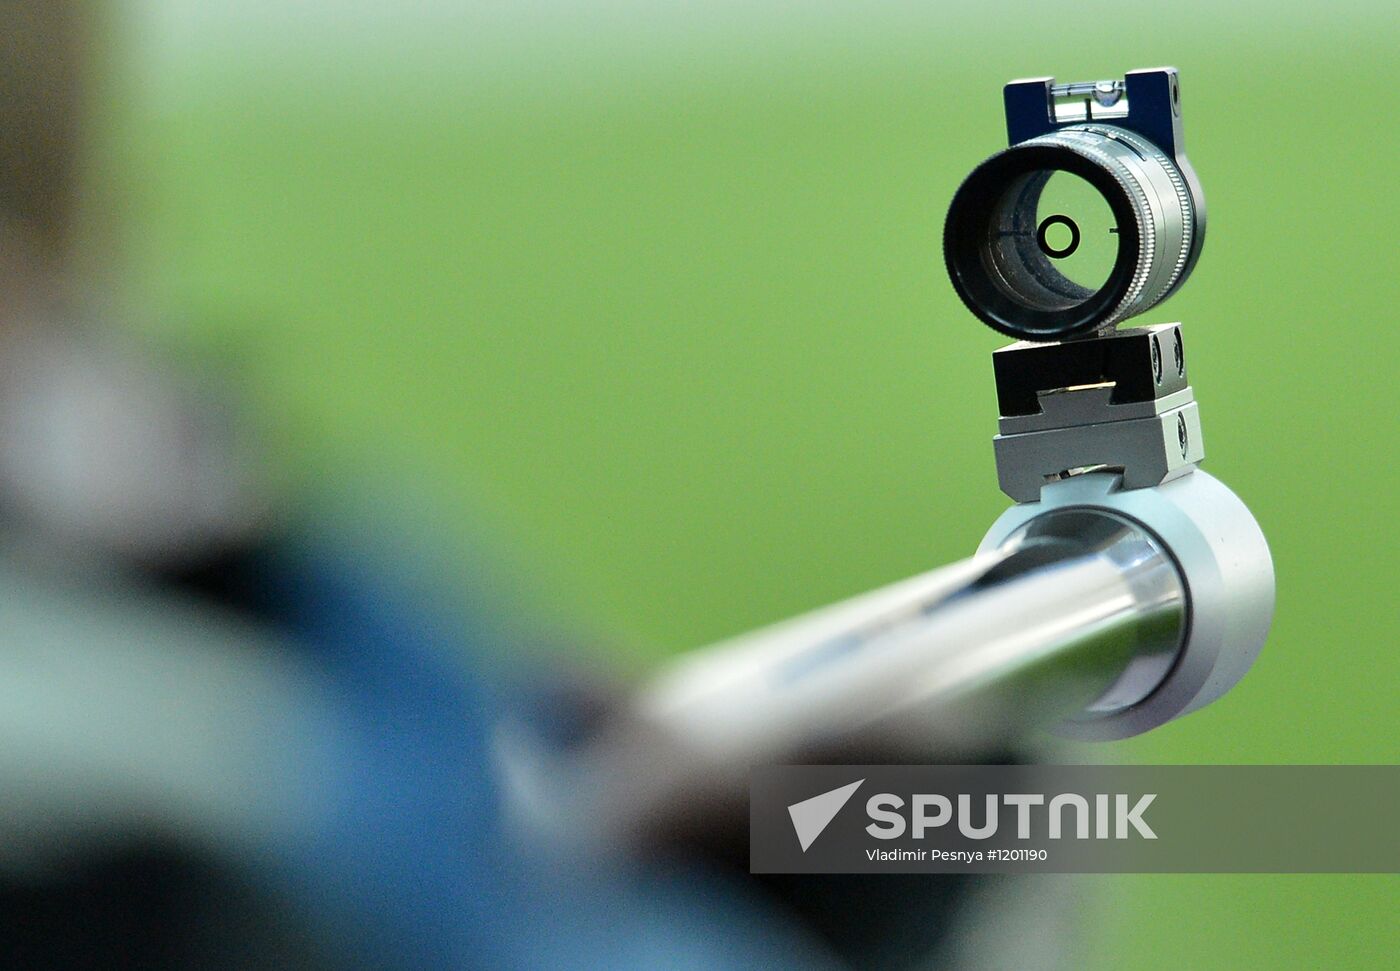 2012 Olympics. Men's rifle prone